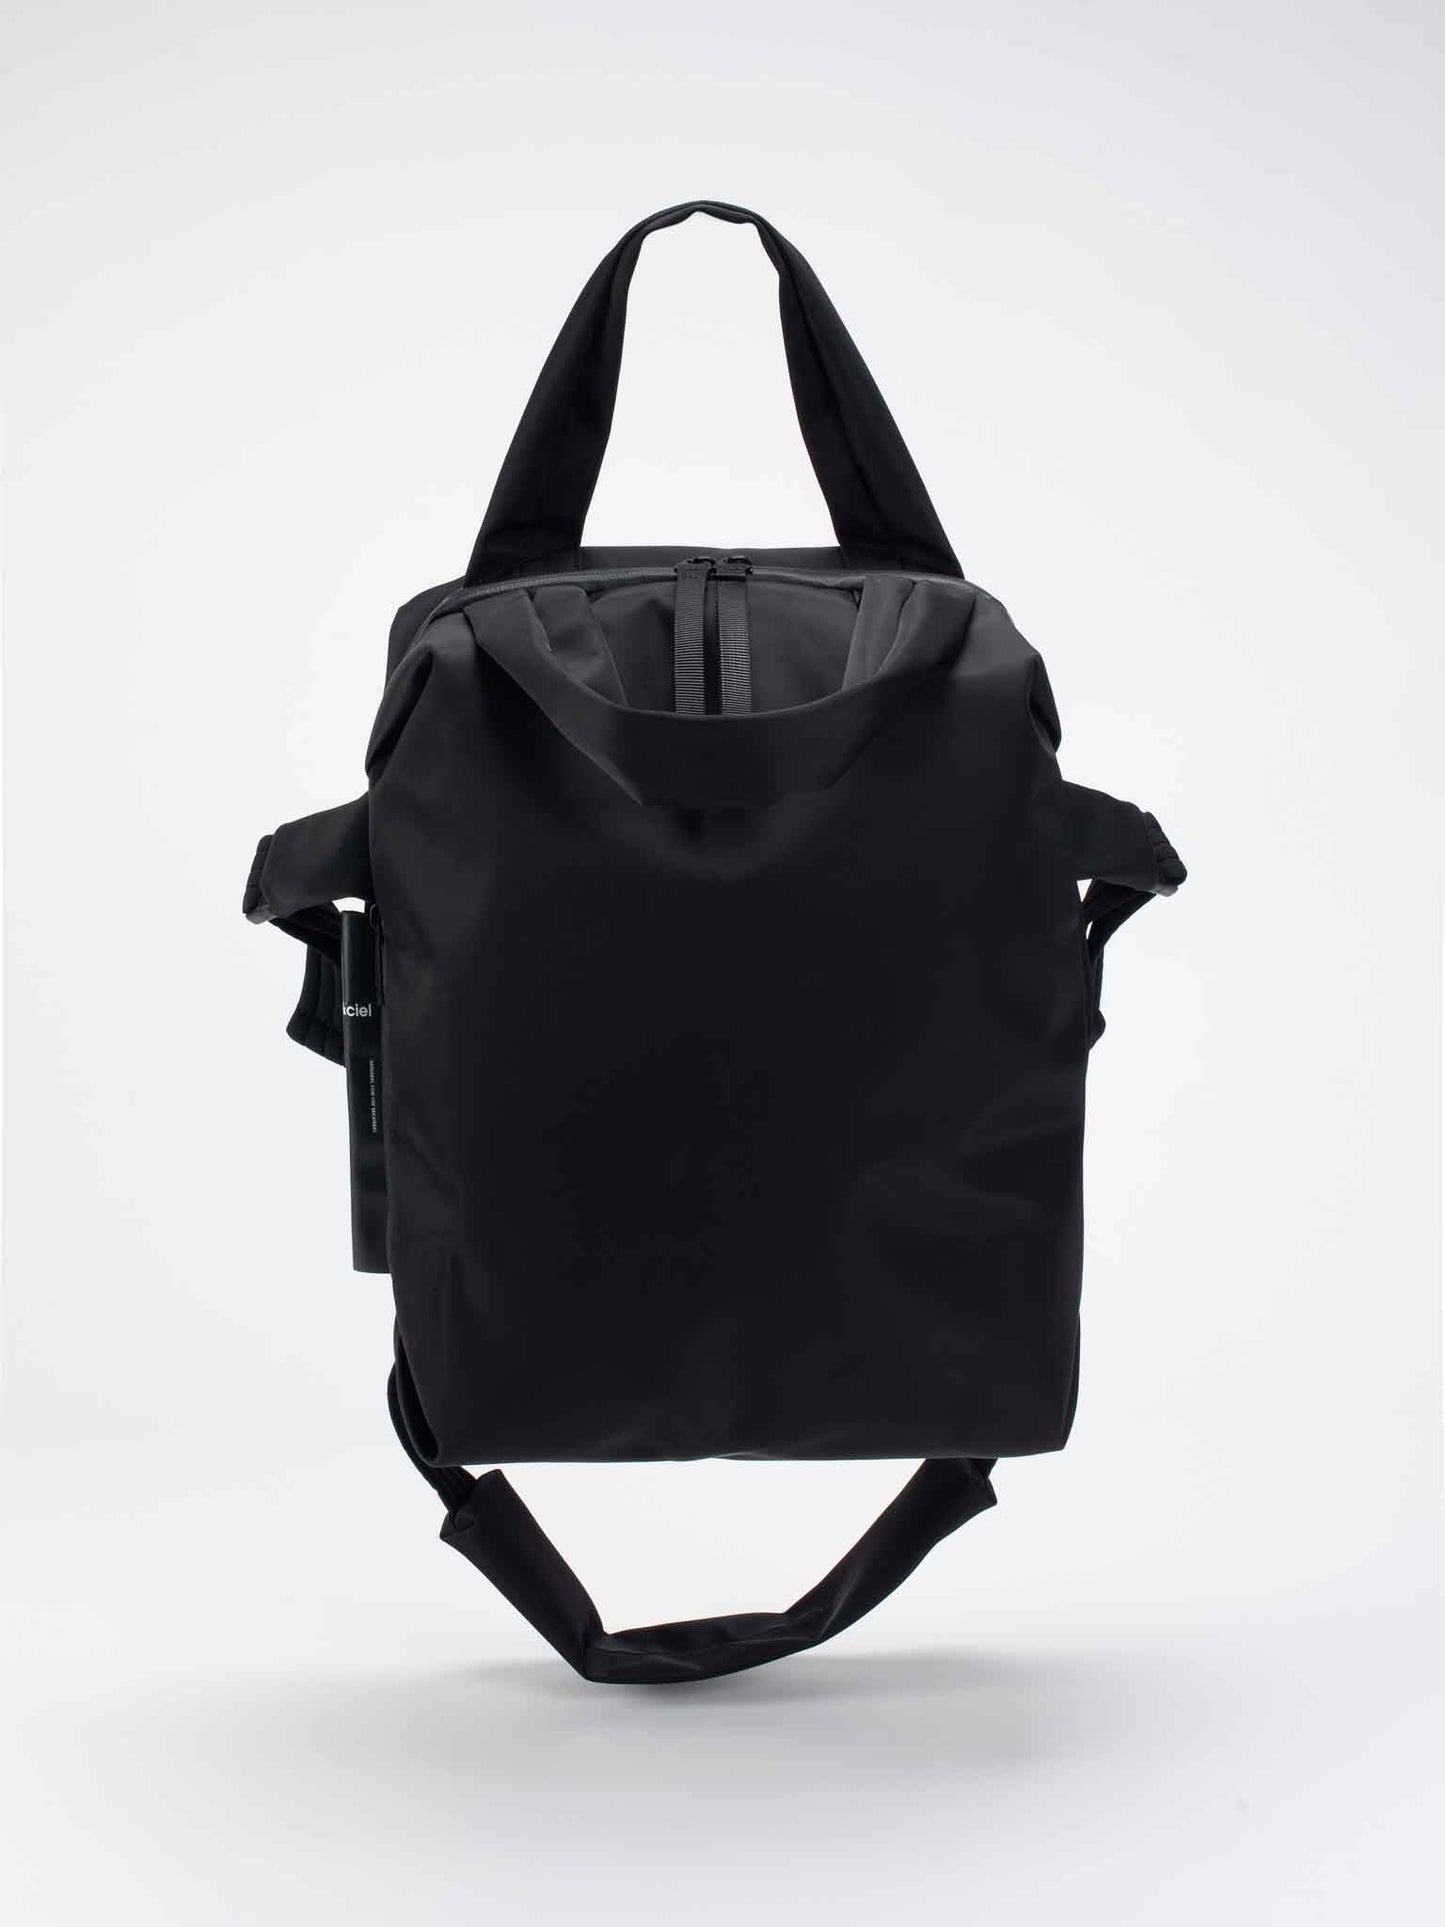 Rour Sleek Black Bag